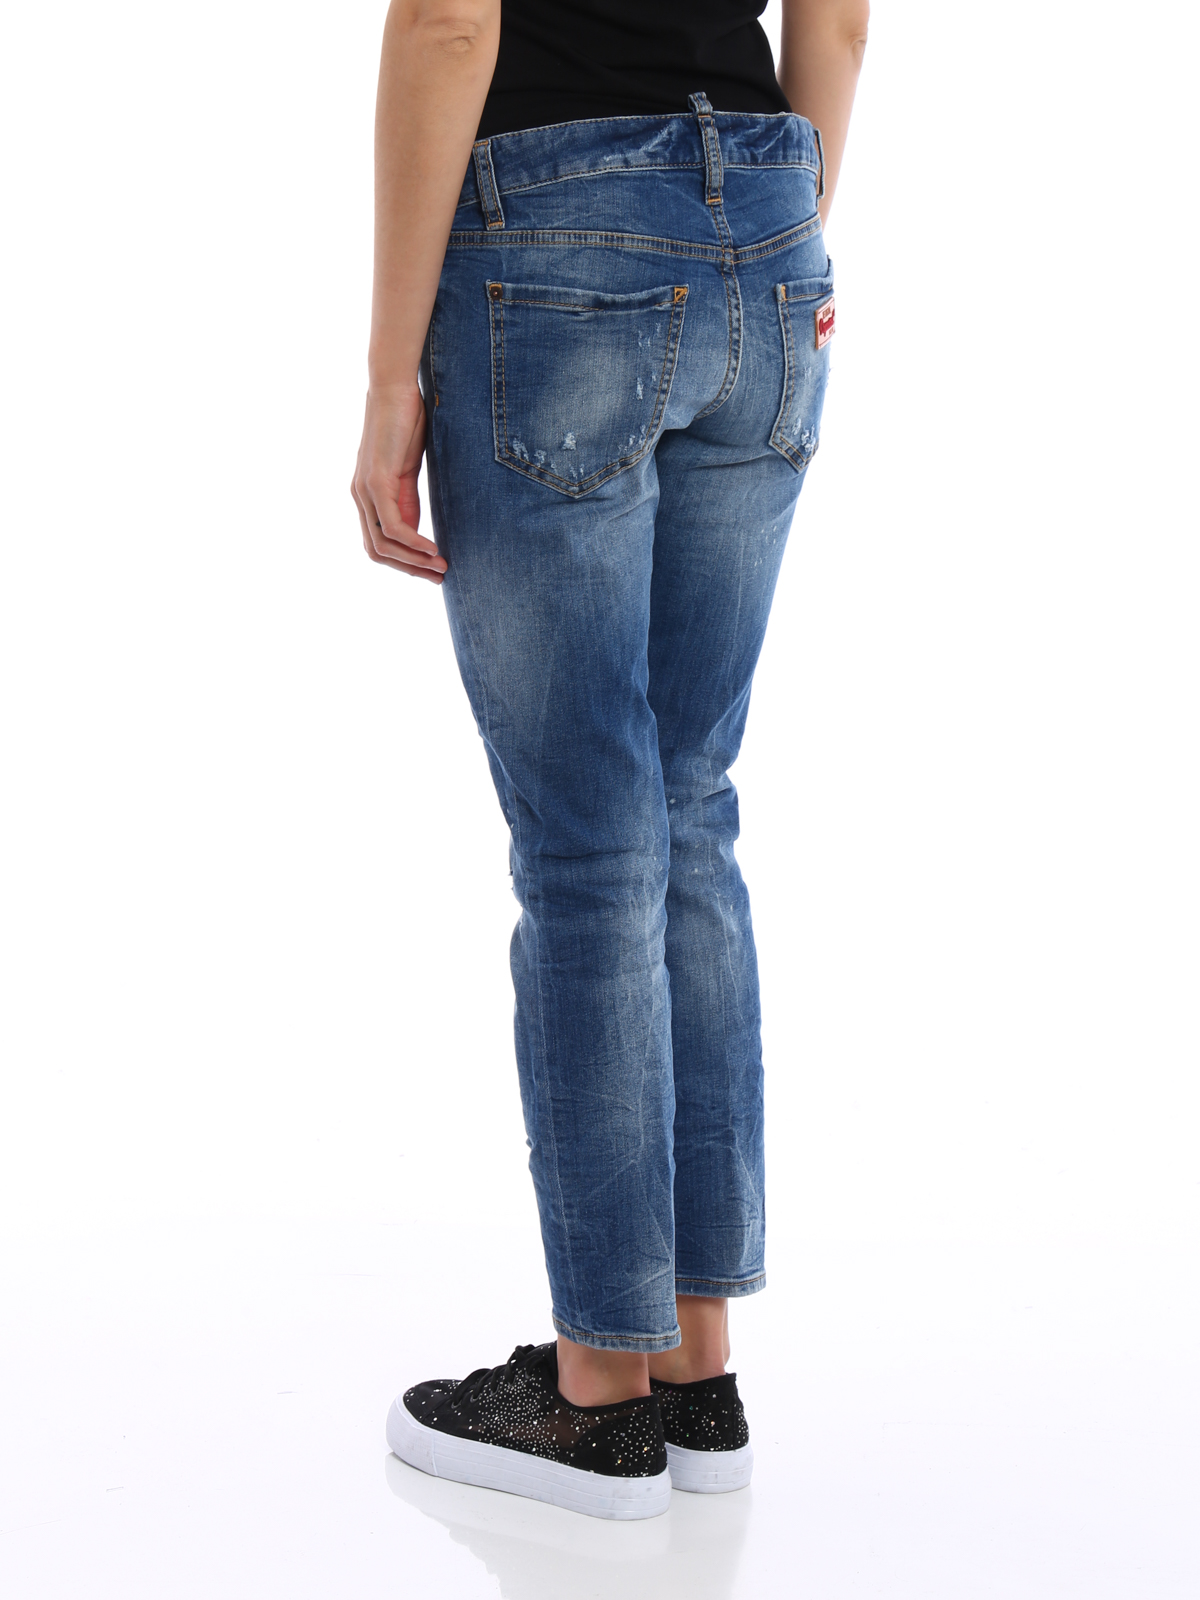 jeans dsquared2 femme skinny